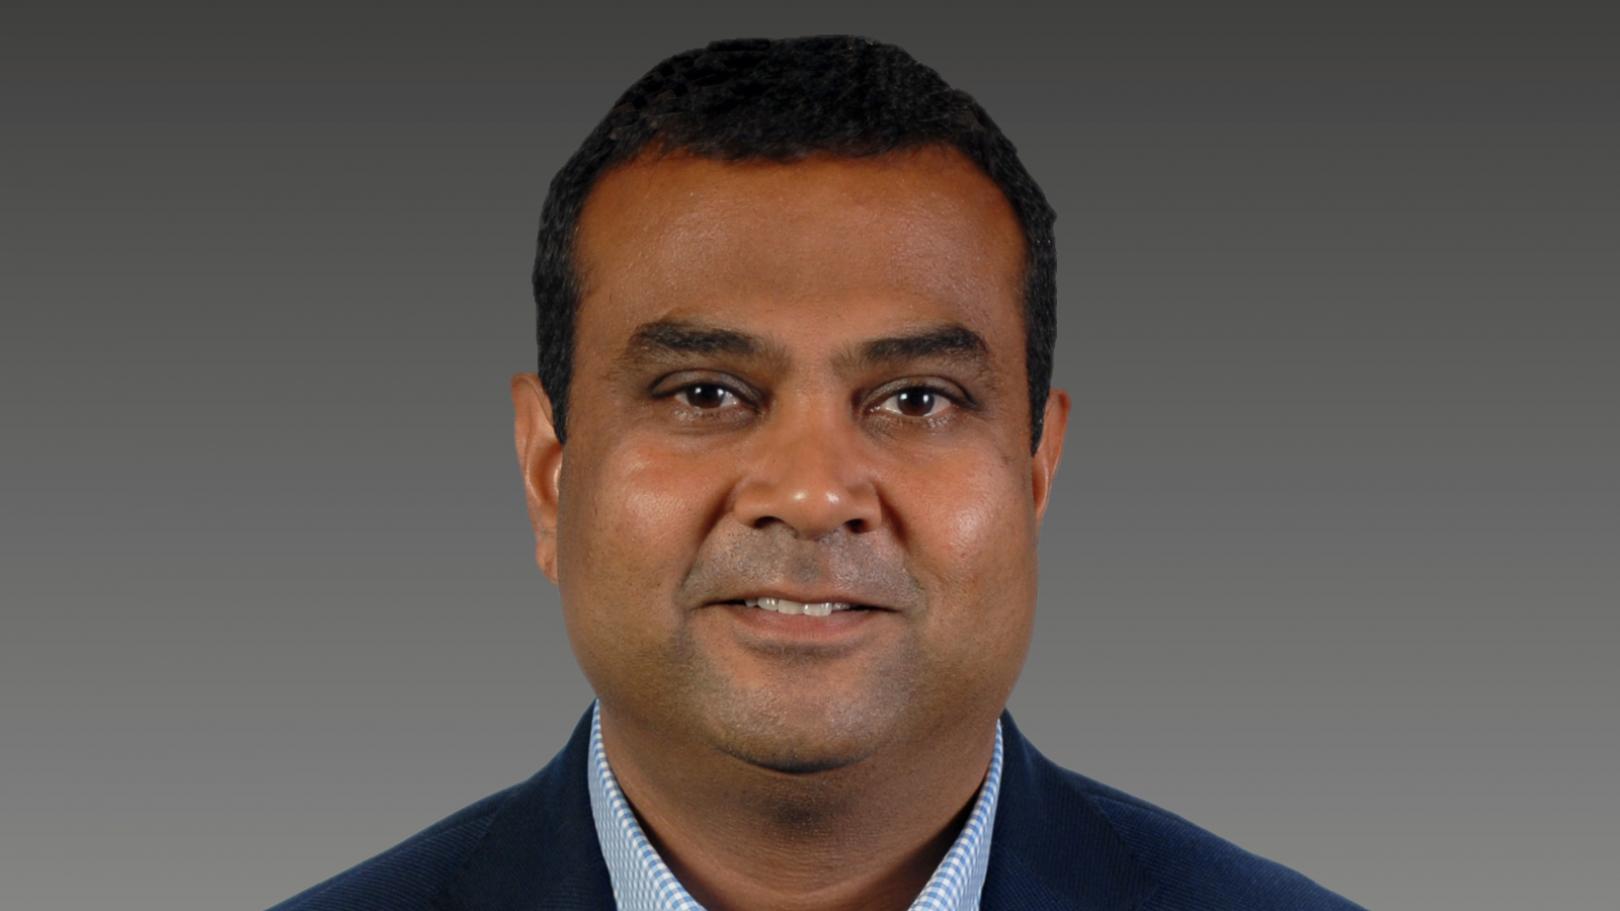 Image of Manmohan Mahajan, Senior Vice President, Global Controller and Chief Accounting Officer of Walgreens Boots Alliance, Inc.